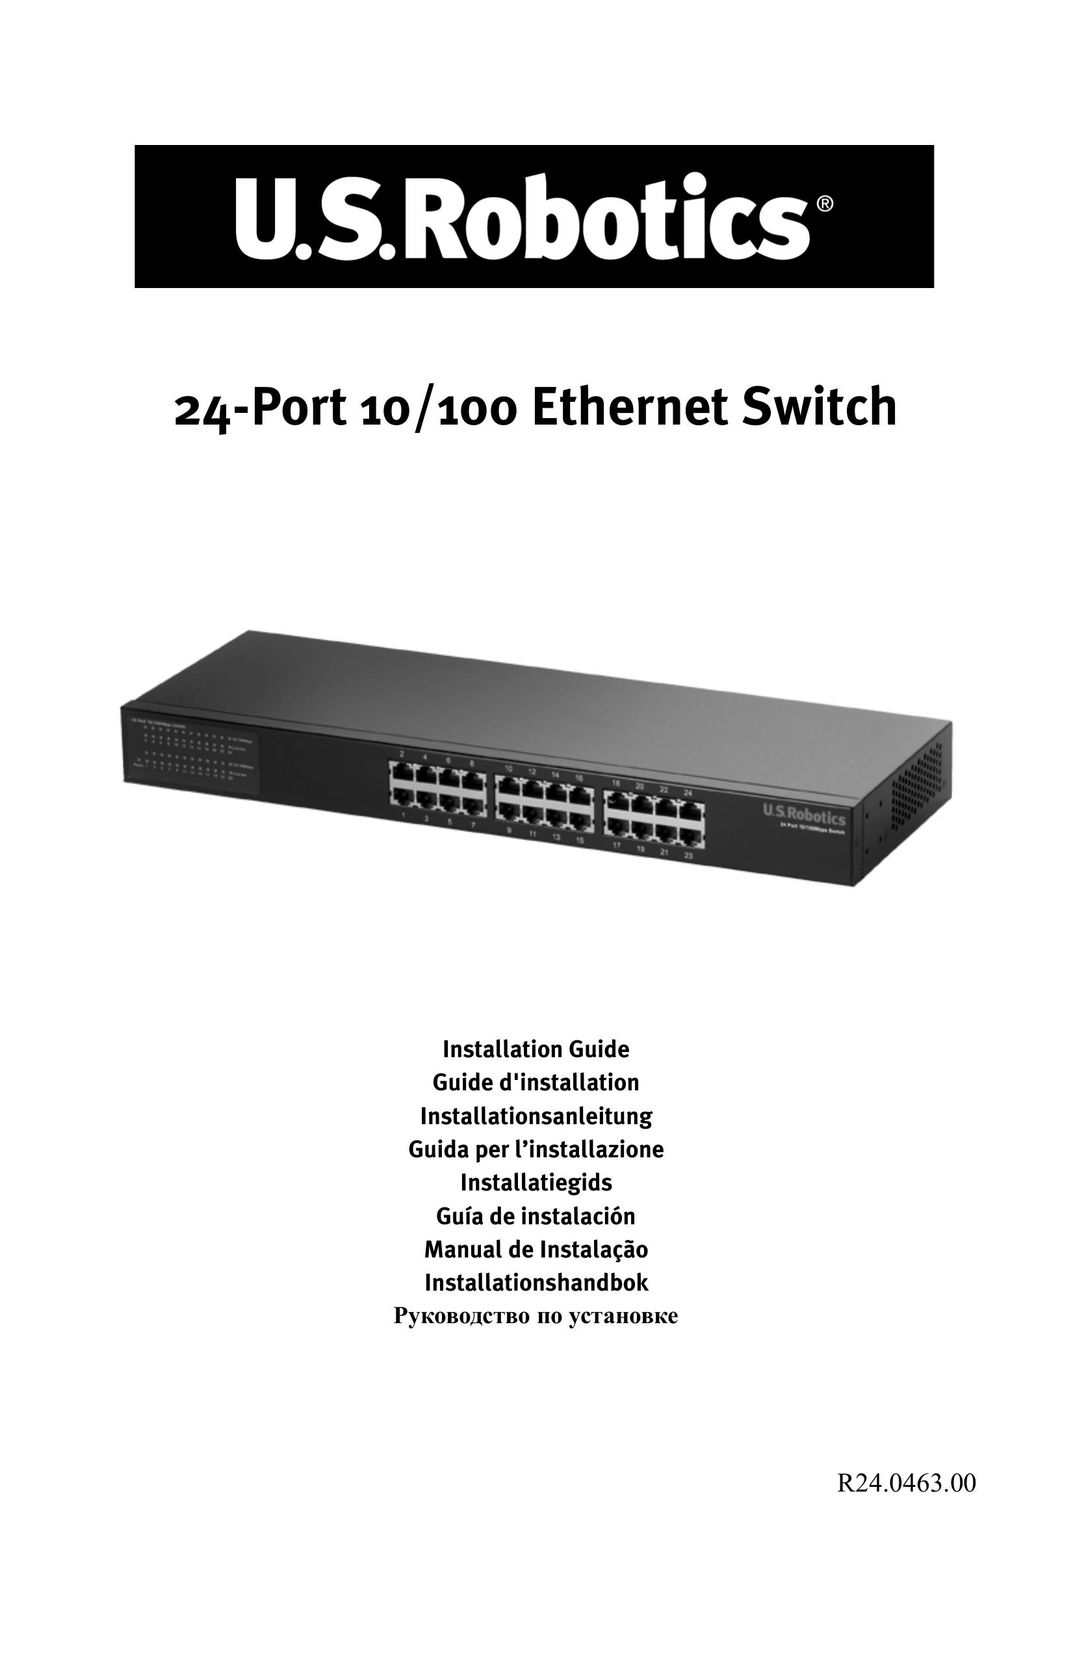 USRobotics 24-Port 10/100 Switch User Manual